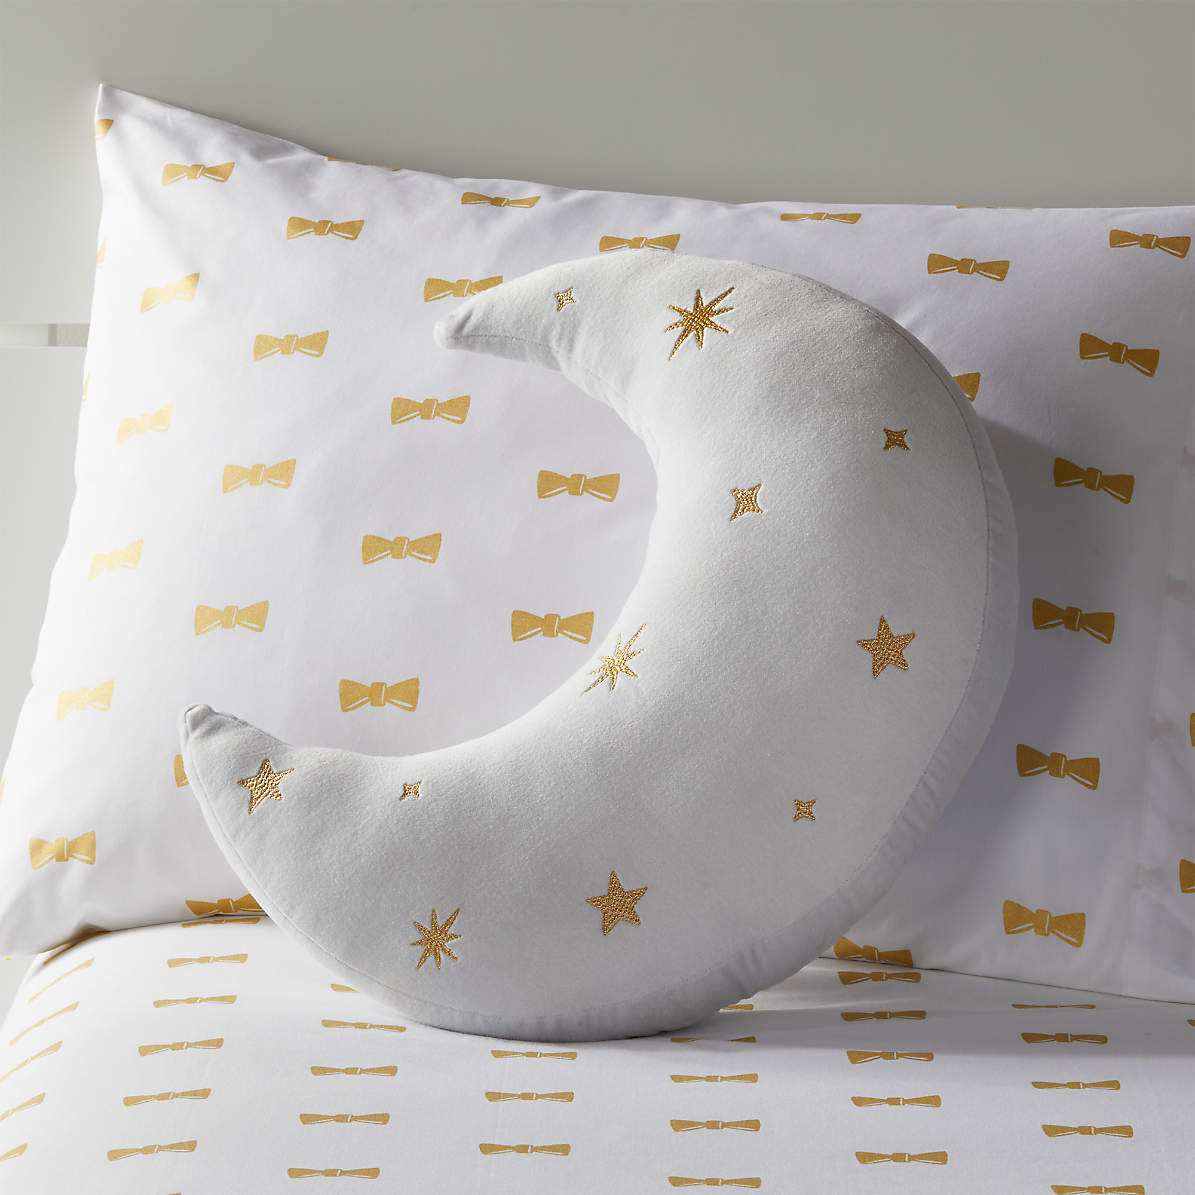 Moon подушки. Подушка Луна. Декоративная подушка полумесяц  для детей. Подушка полумесяц для новорожденных. Подушка Луна мягкая игрушка.